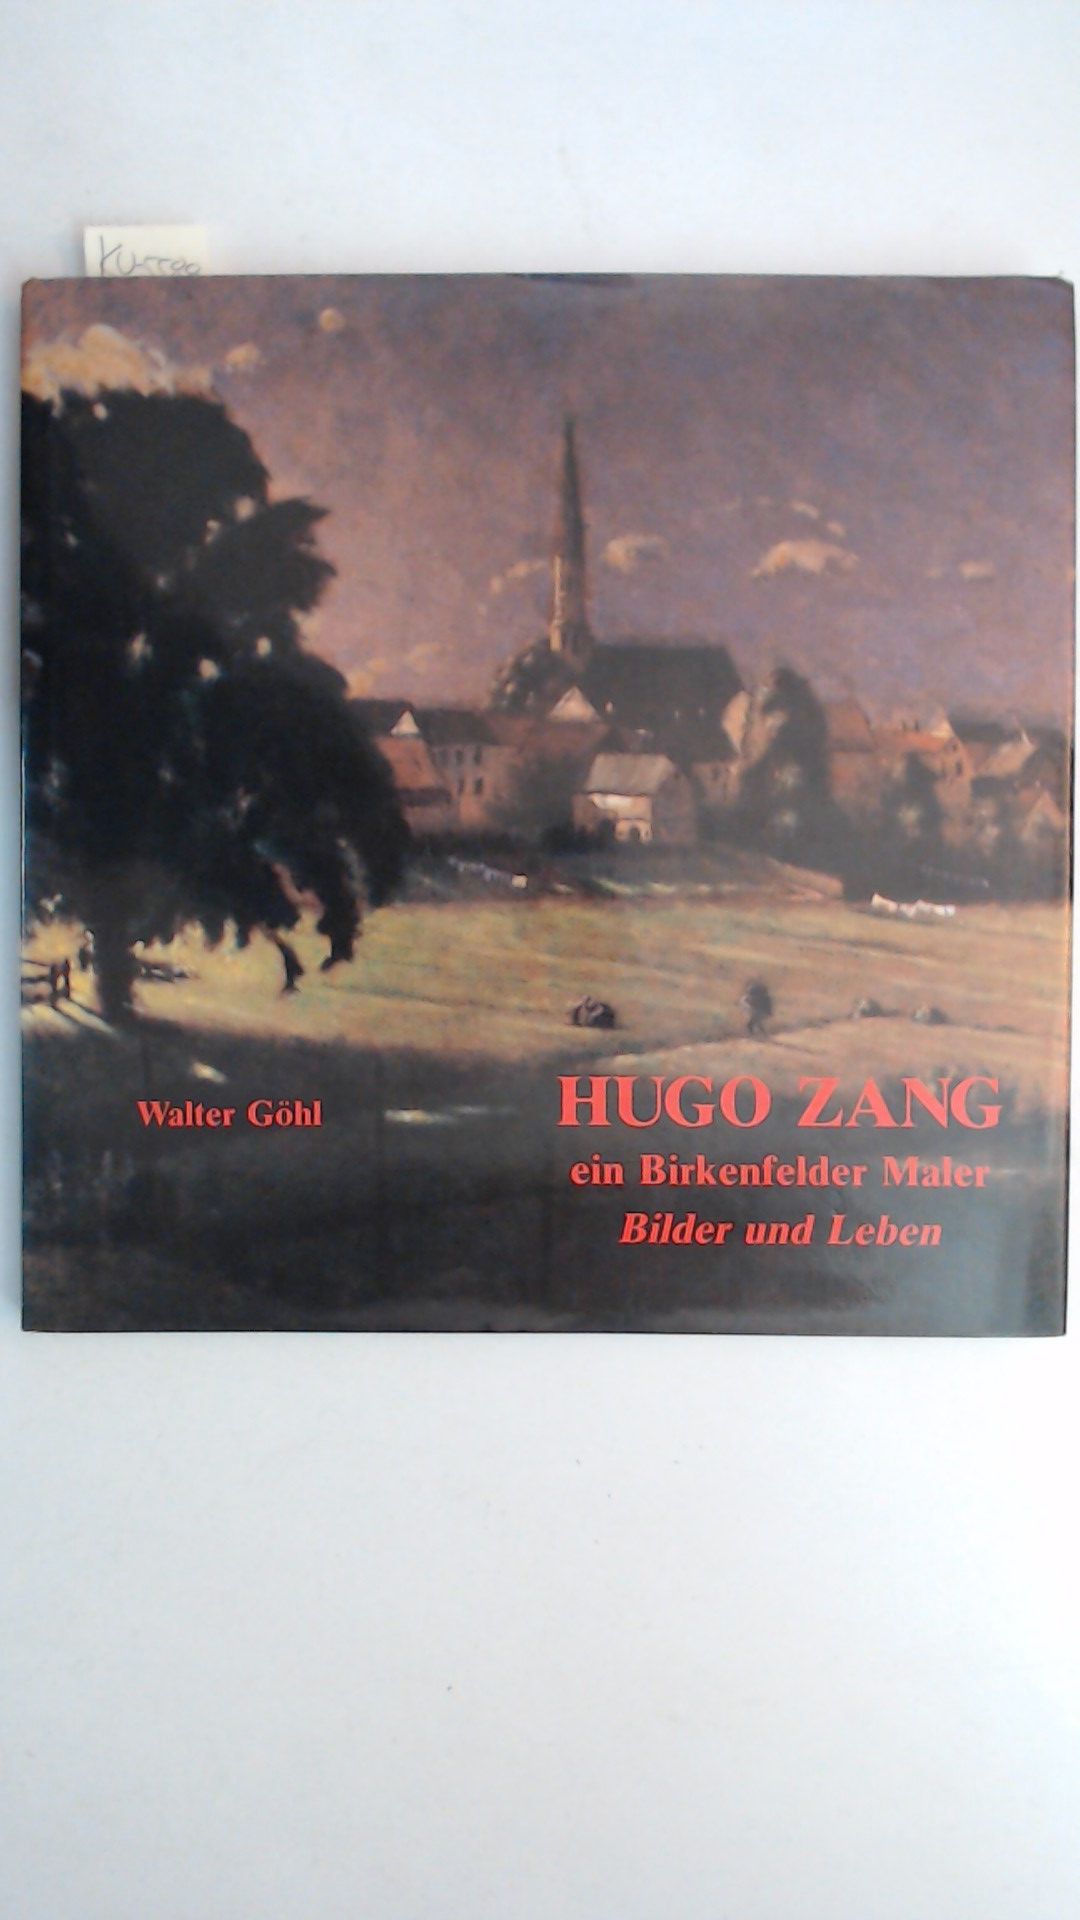 Hugo Zang, Bilder und Leben : Bilder u. Leben. - Göhl, Walter und Hugo (Illustrator) Zang